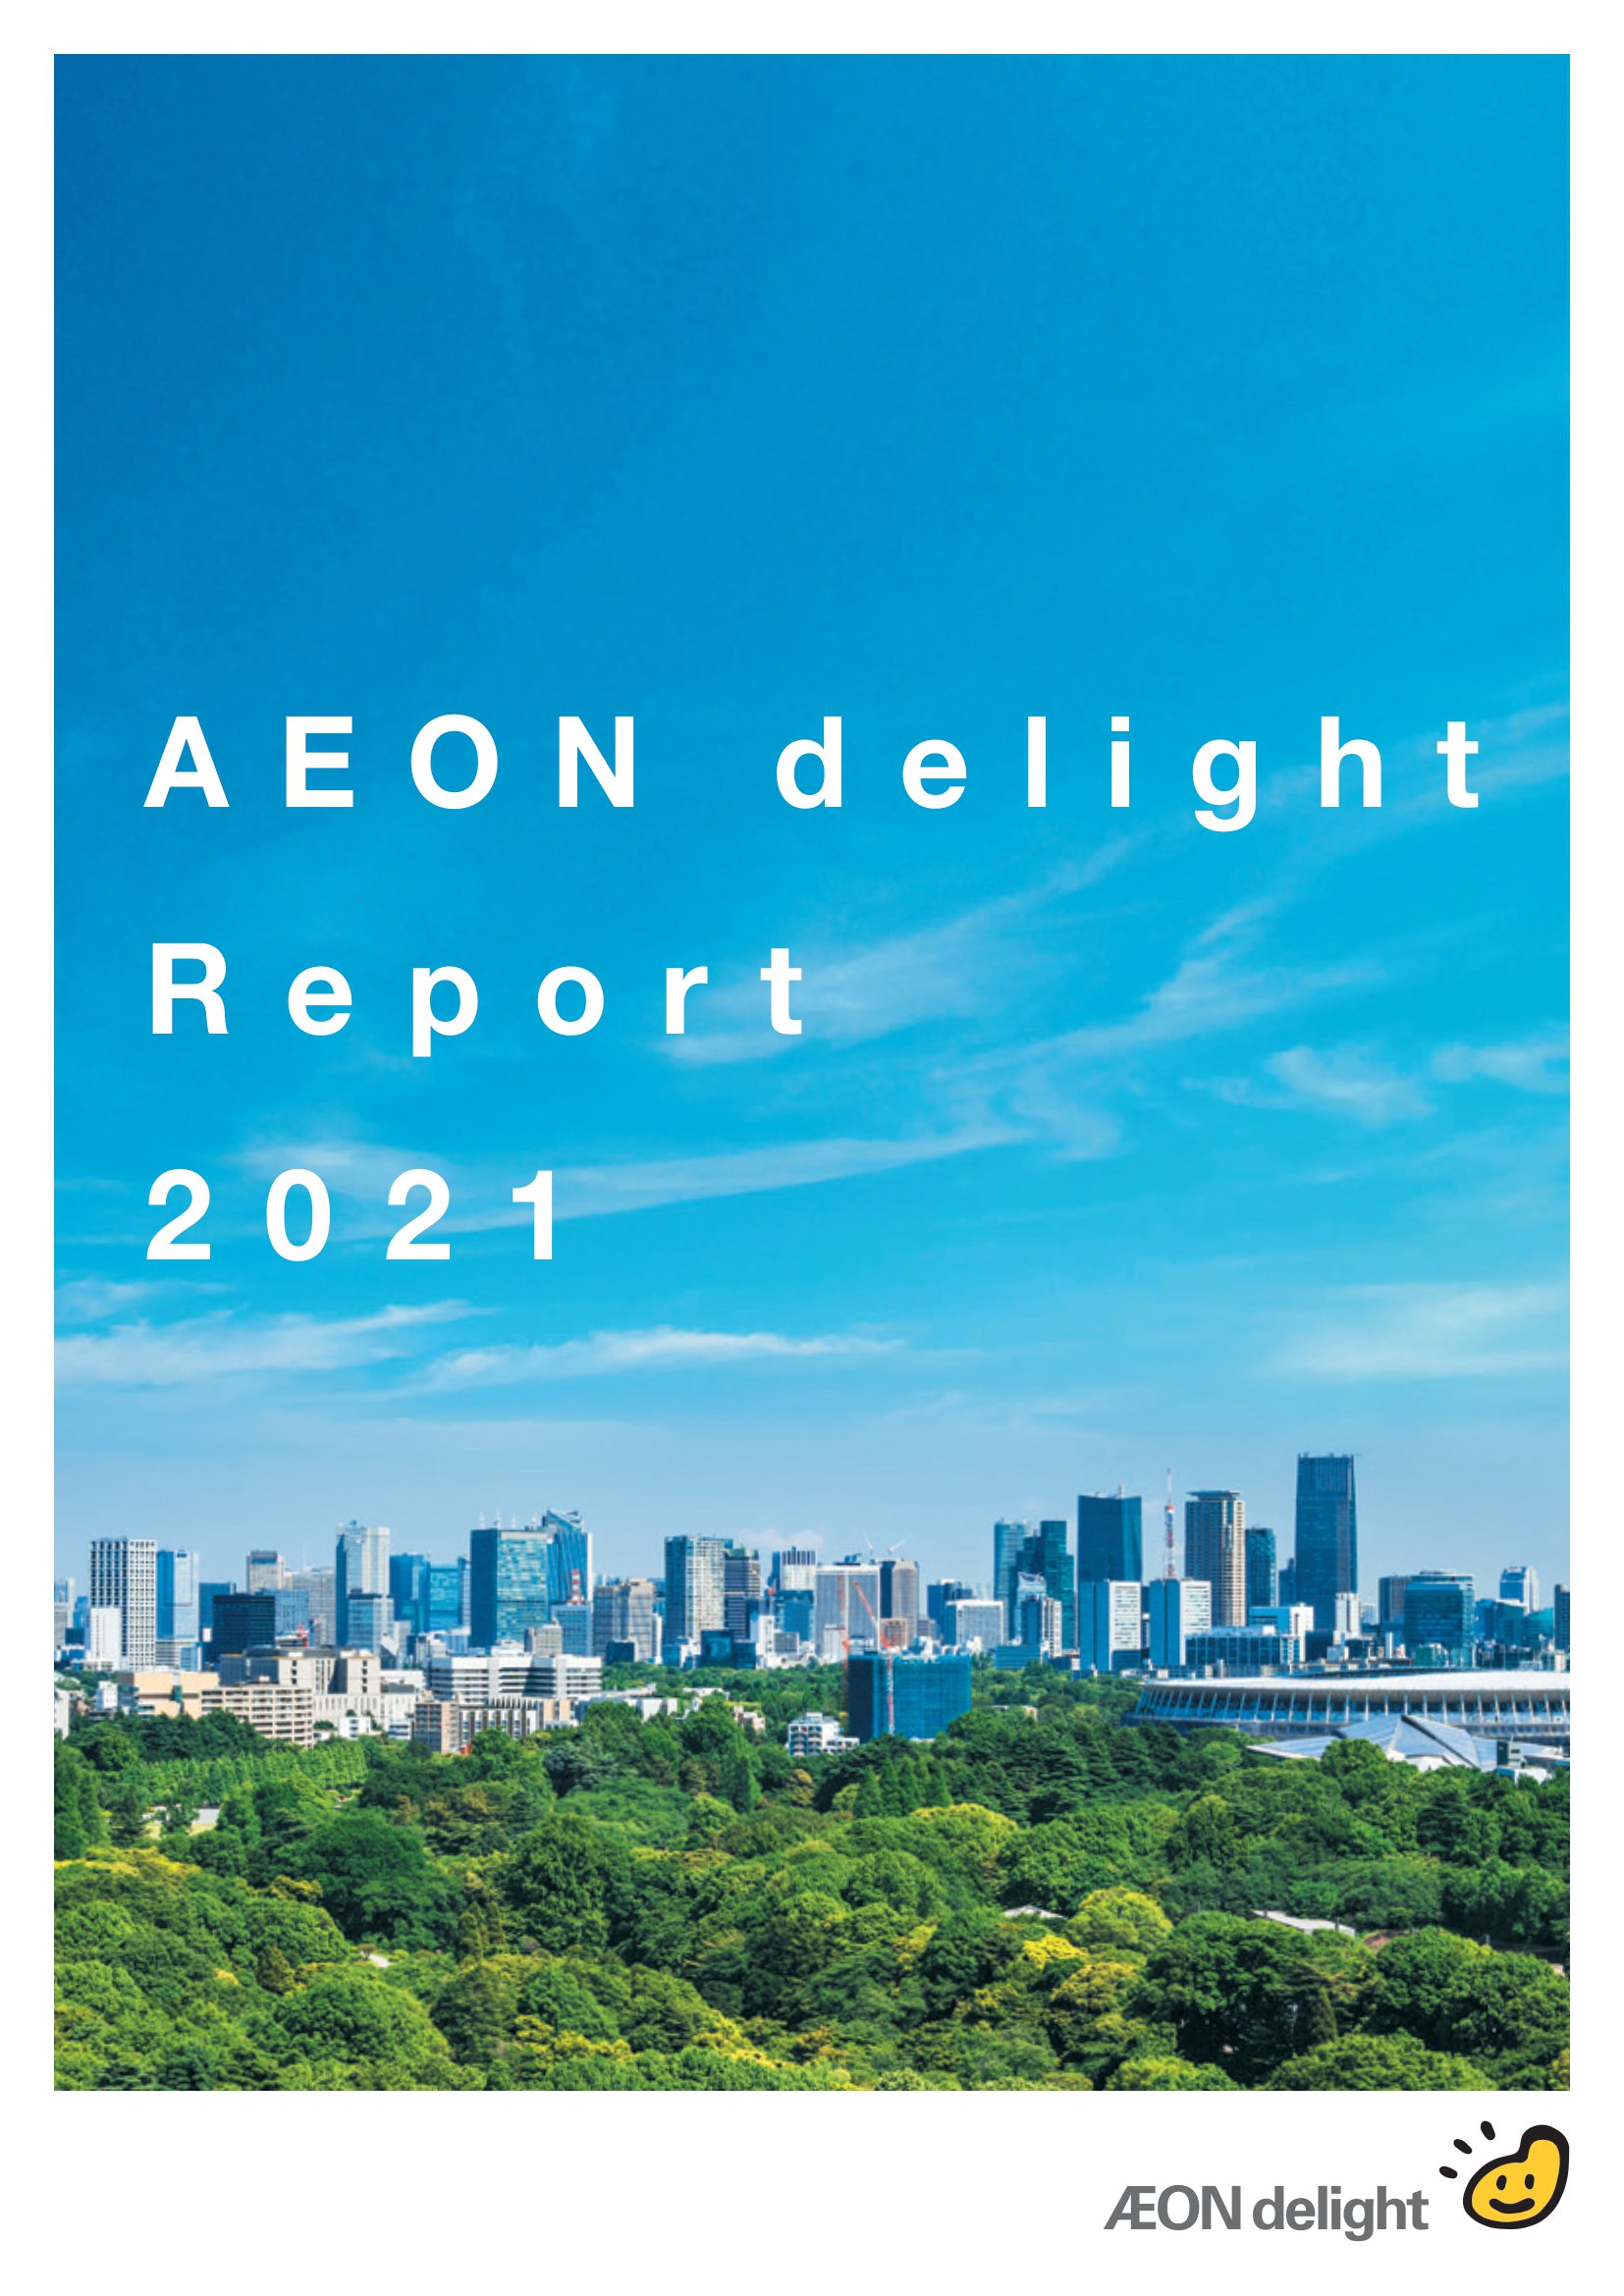 AEON delight Report 2021